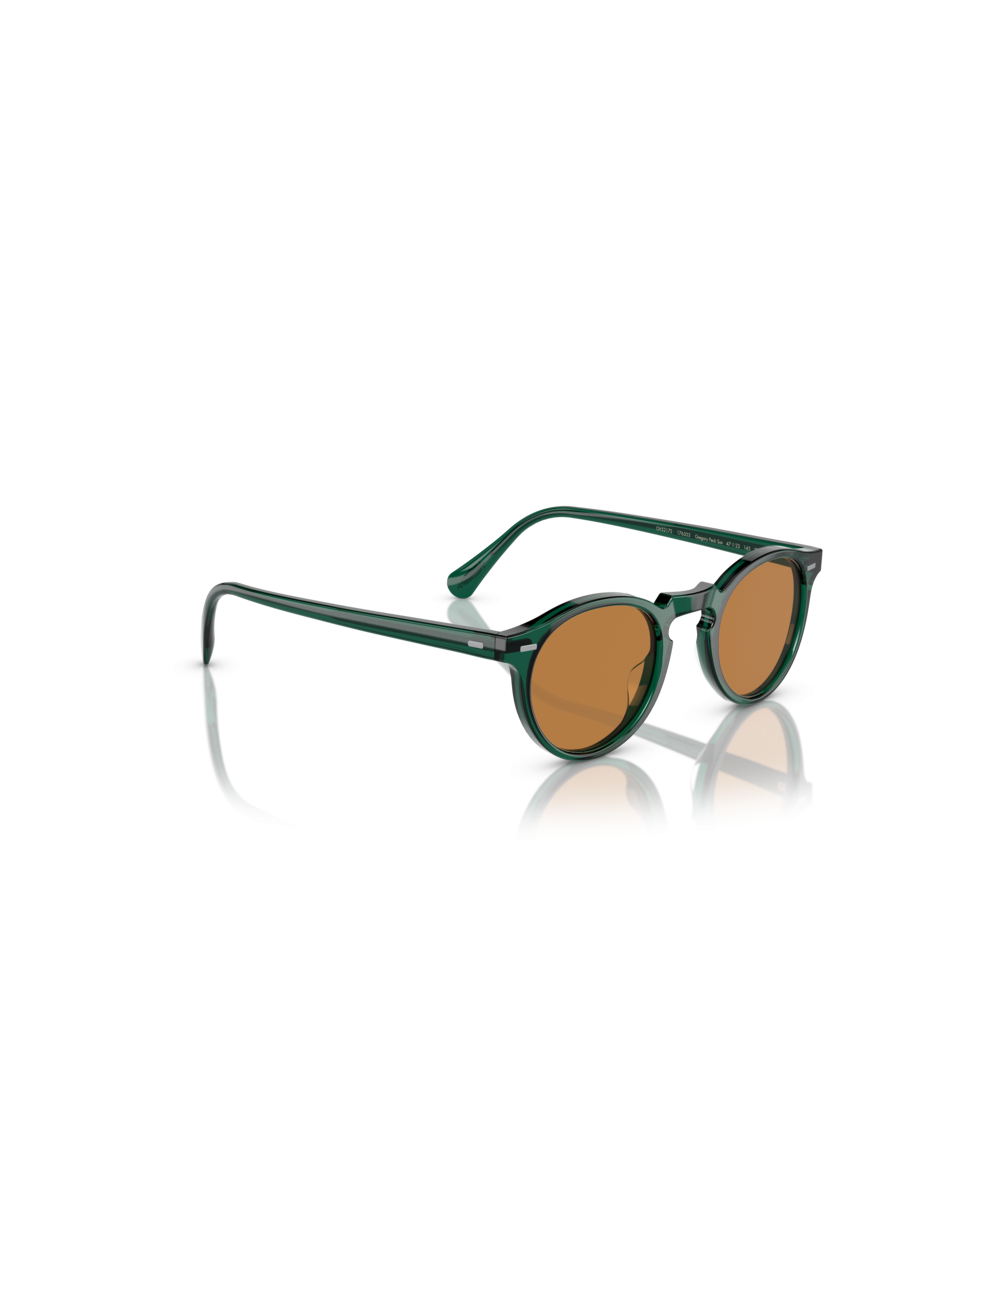 Oliver Peoples Sunglasses - The Optic Shop-mncb.edu.vn